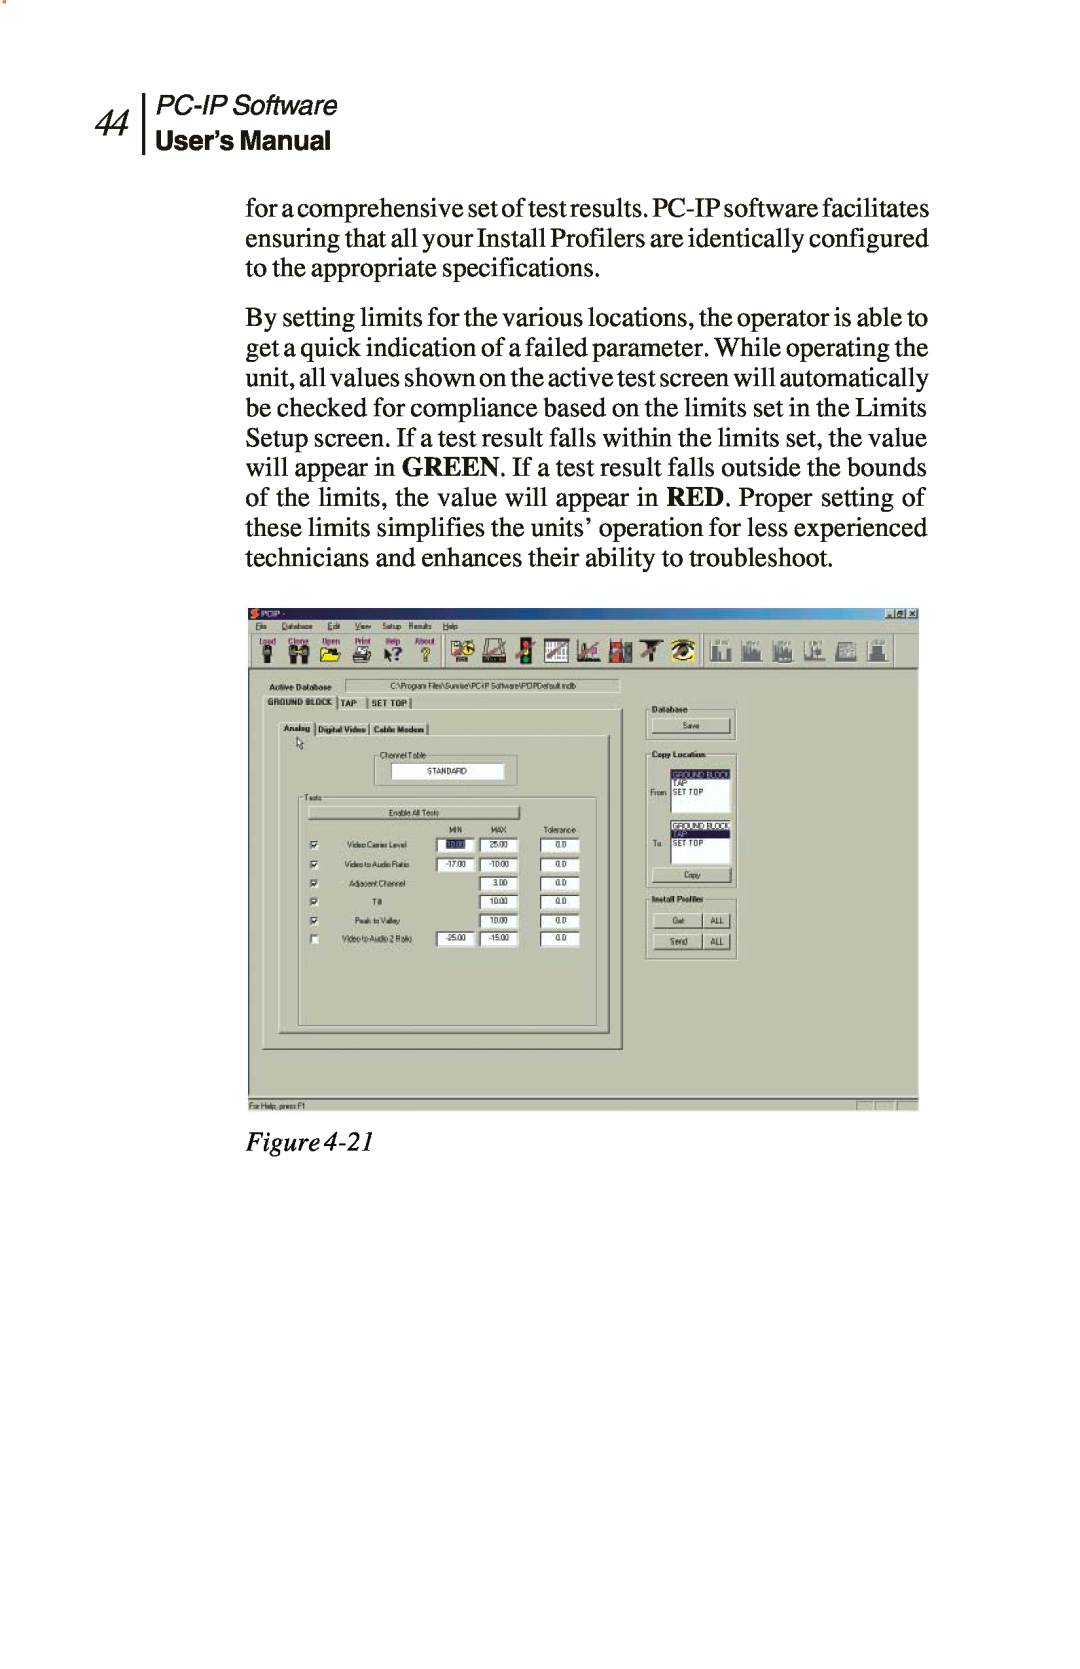 Sunrise Global CM250 IP, CM100 IP, and CM500 IP manual PC-IPSoftware, User’s Manual, Figure 